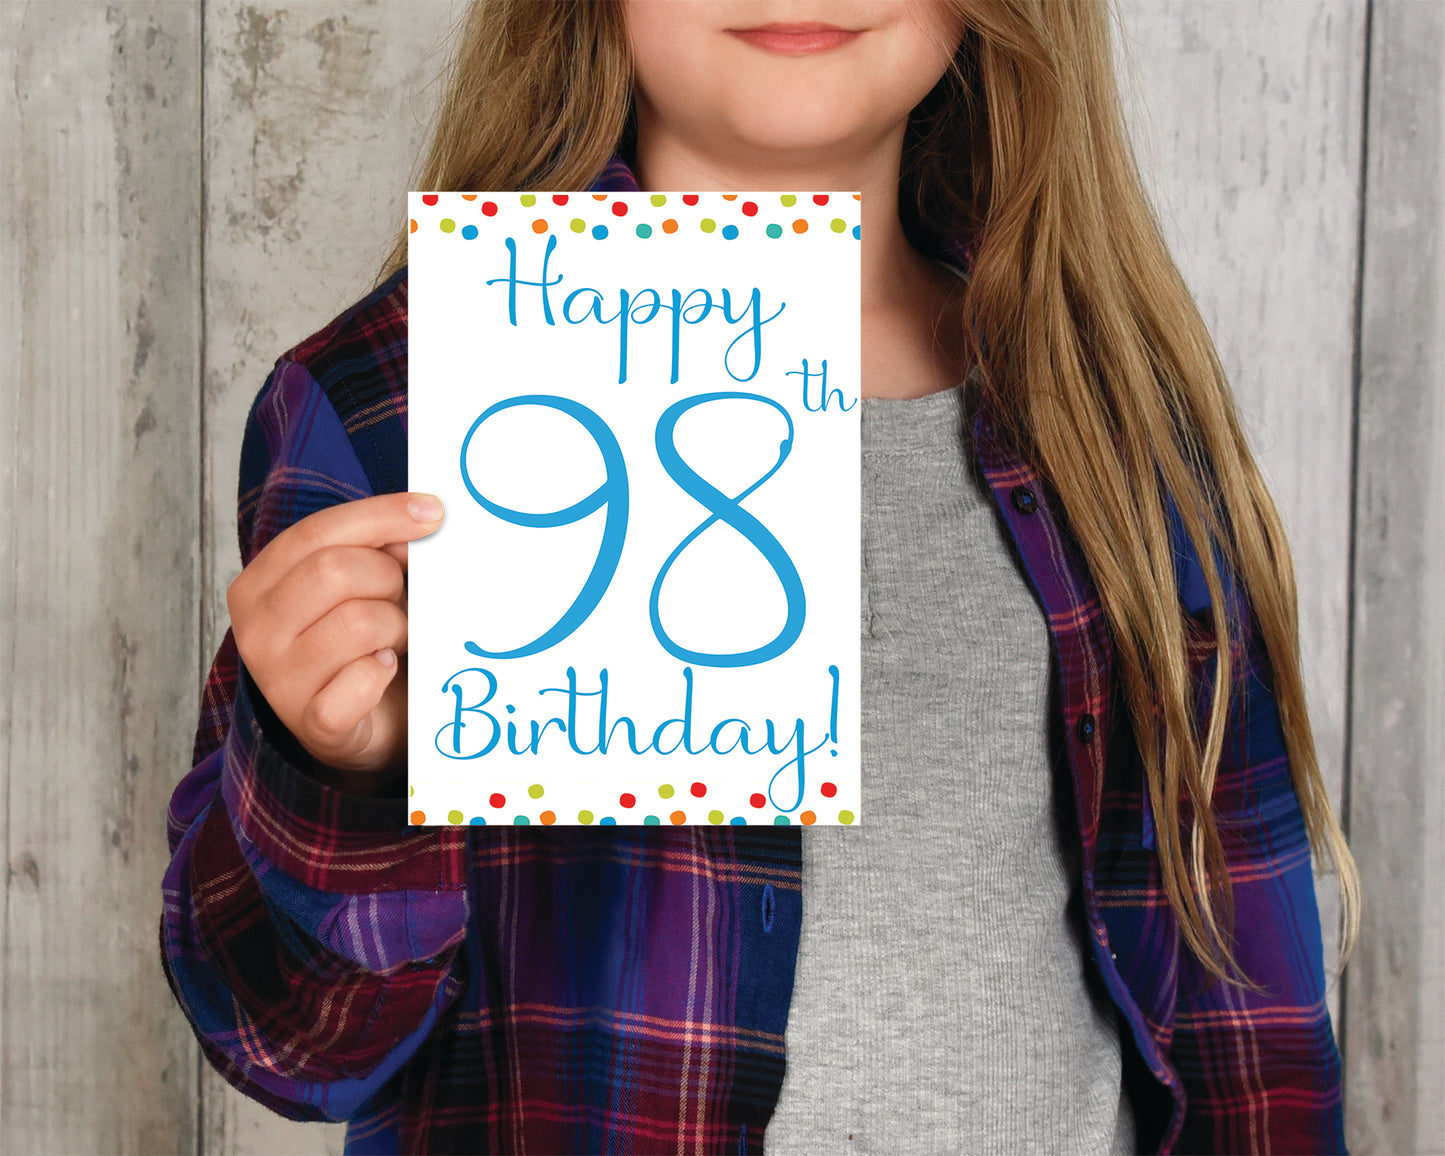 98th Birthday - Single Card